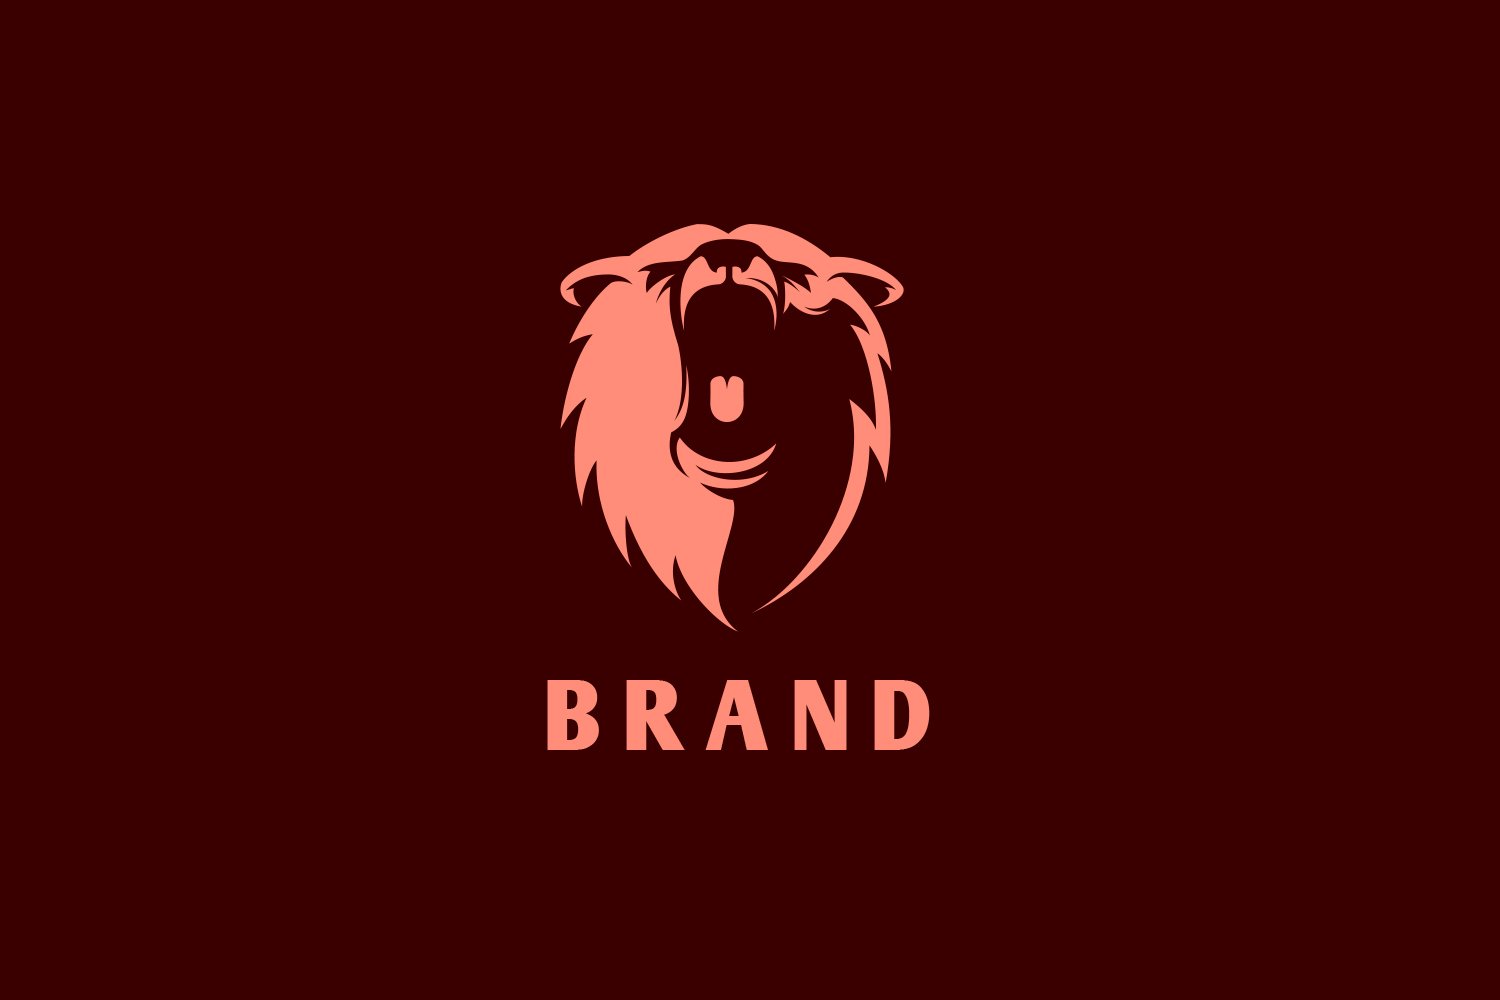 Minimalist Angry Bear Logo Design cover image.